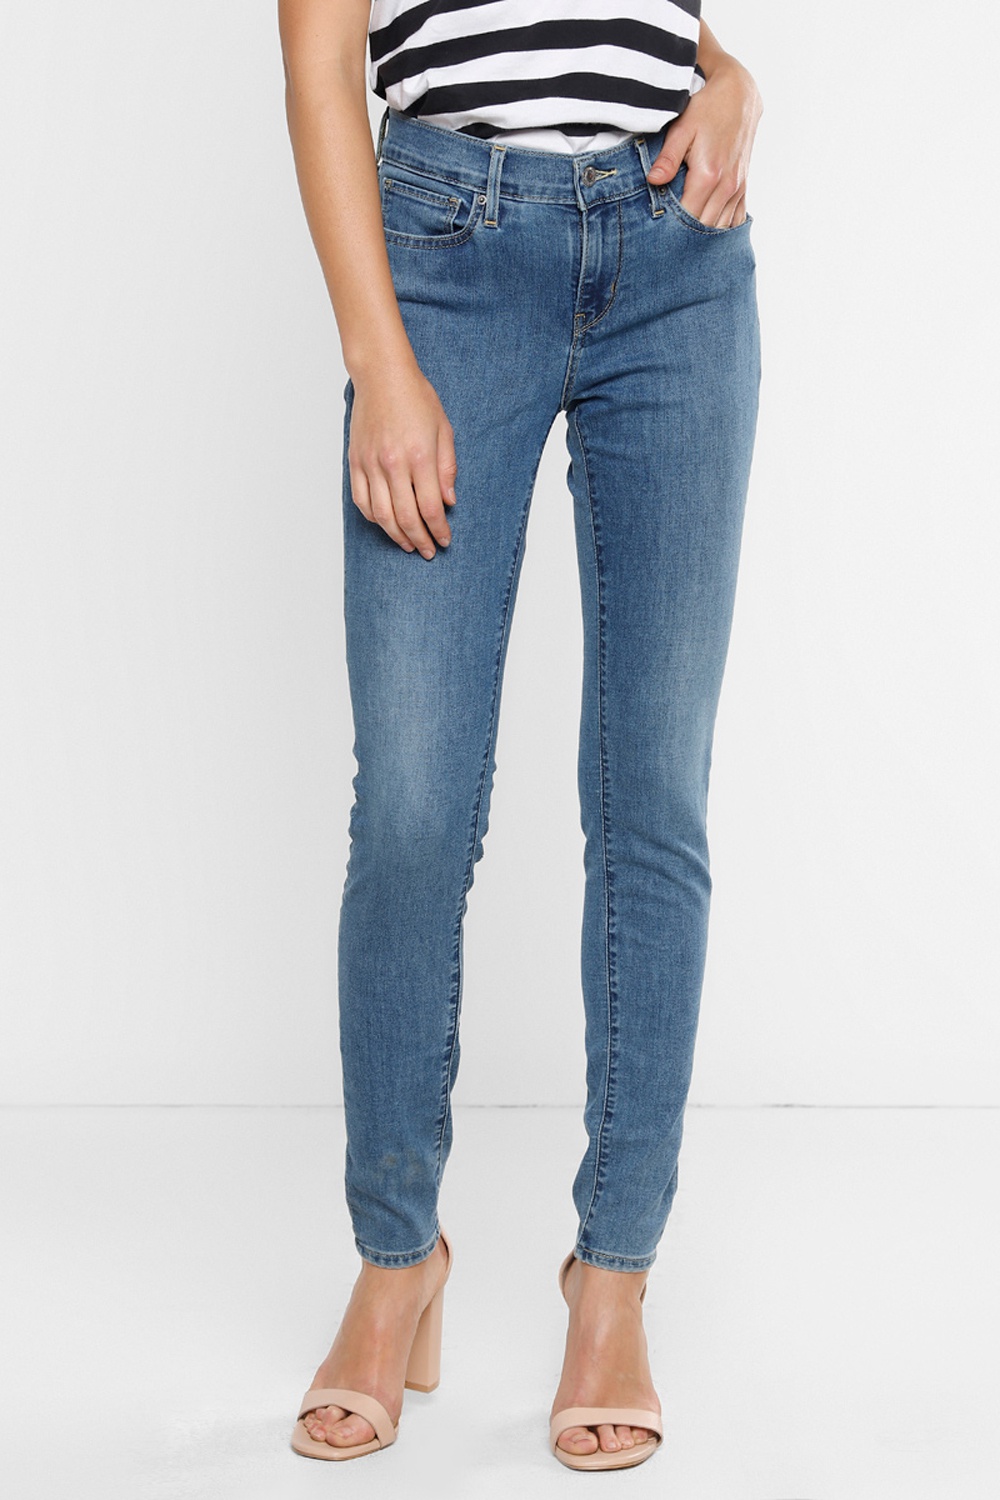 levis super skinny jeans womens